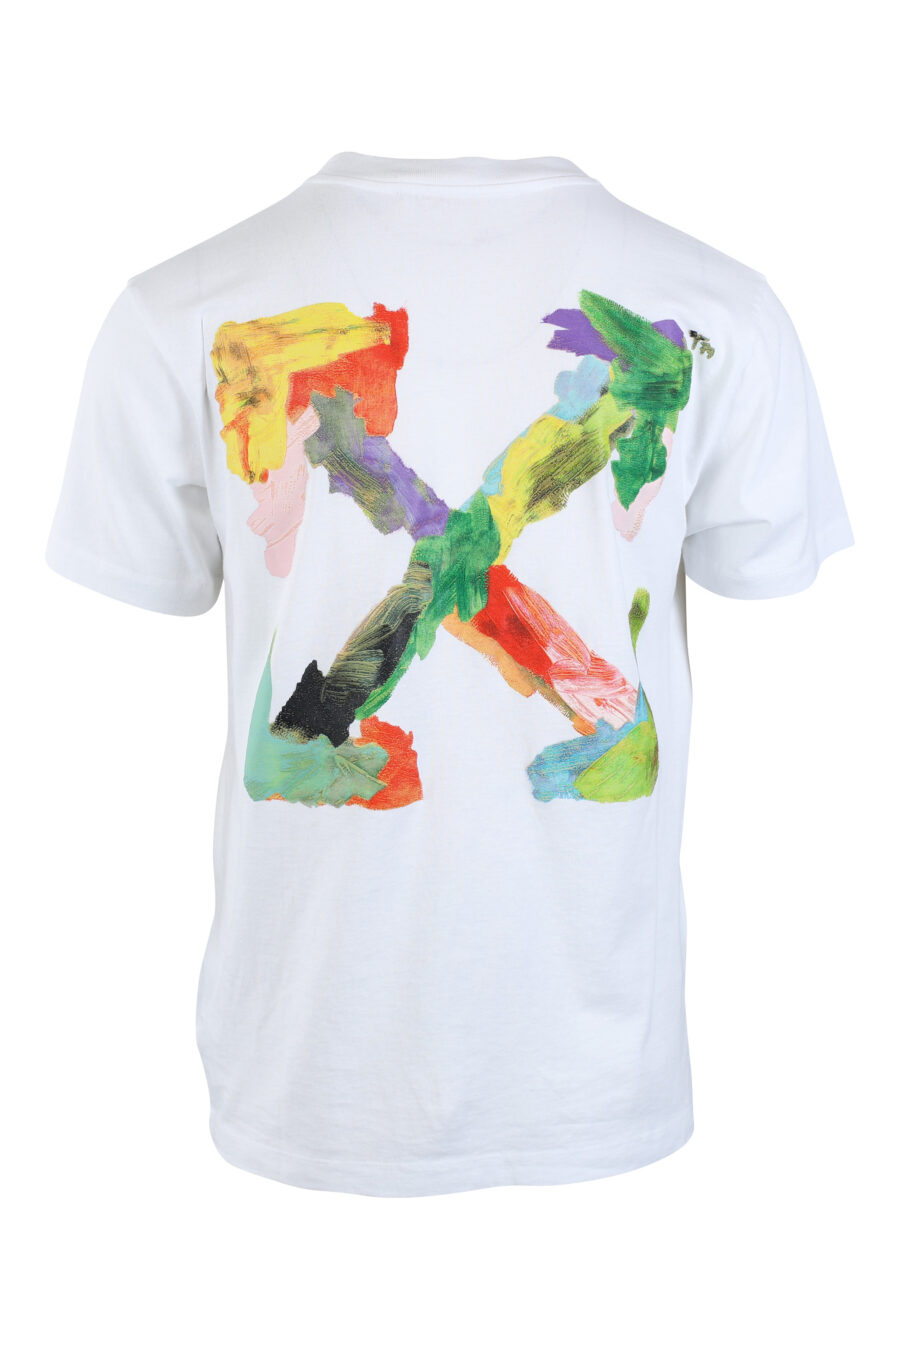 T-shirt branca com maxilogo "arrow" multicolorido nas costas - IMG 2617